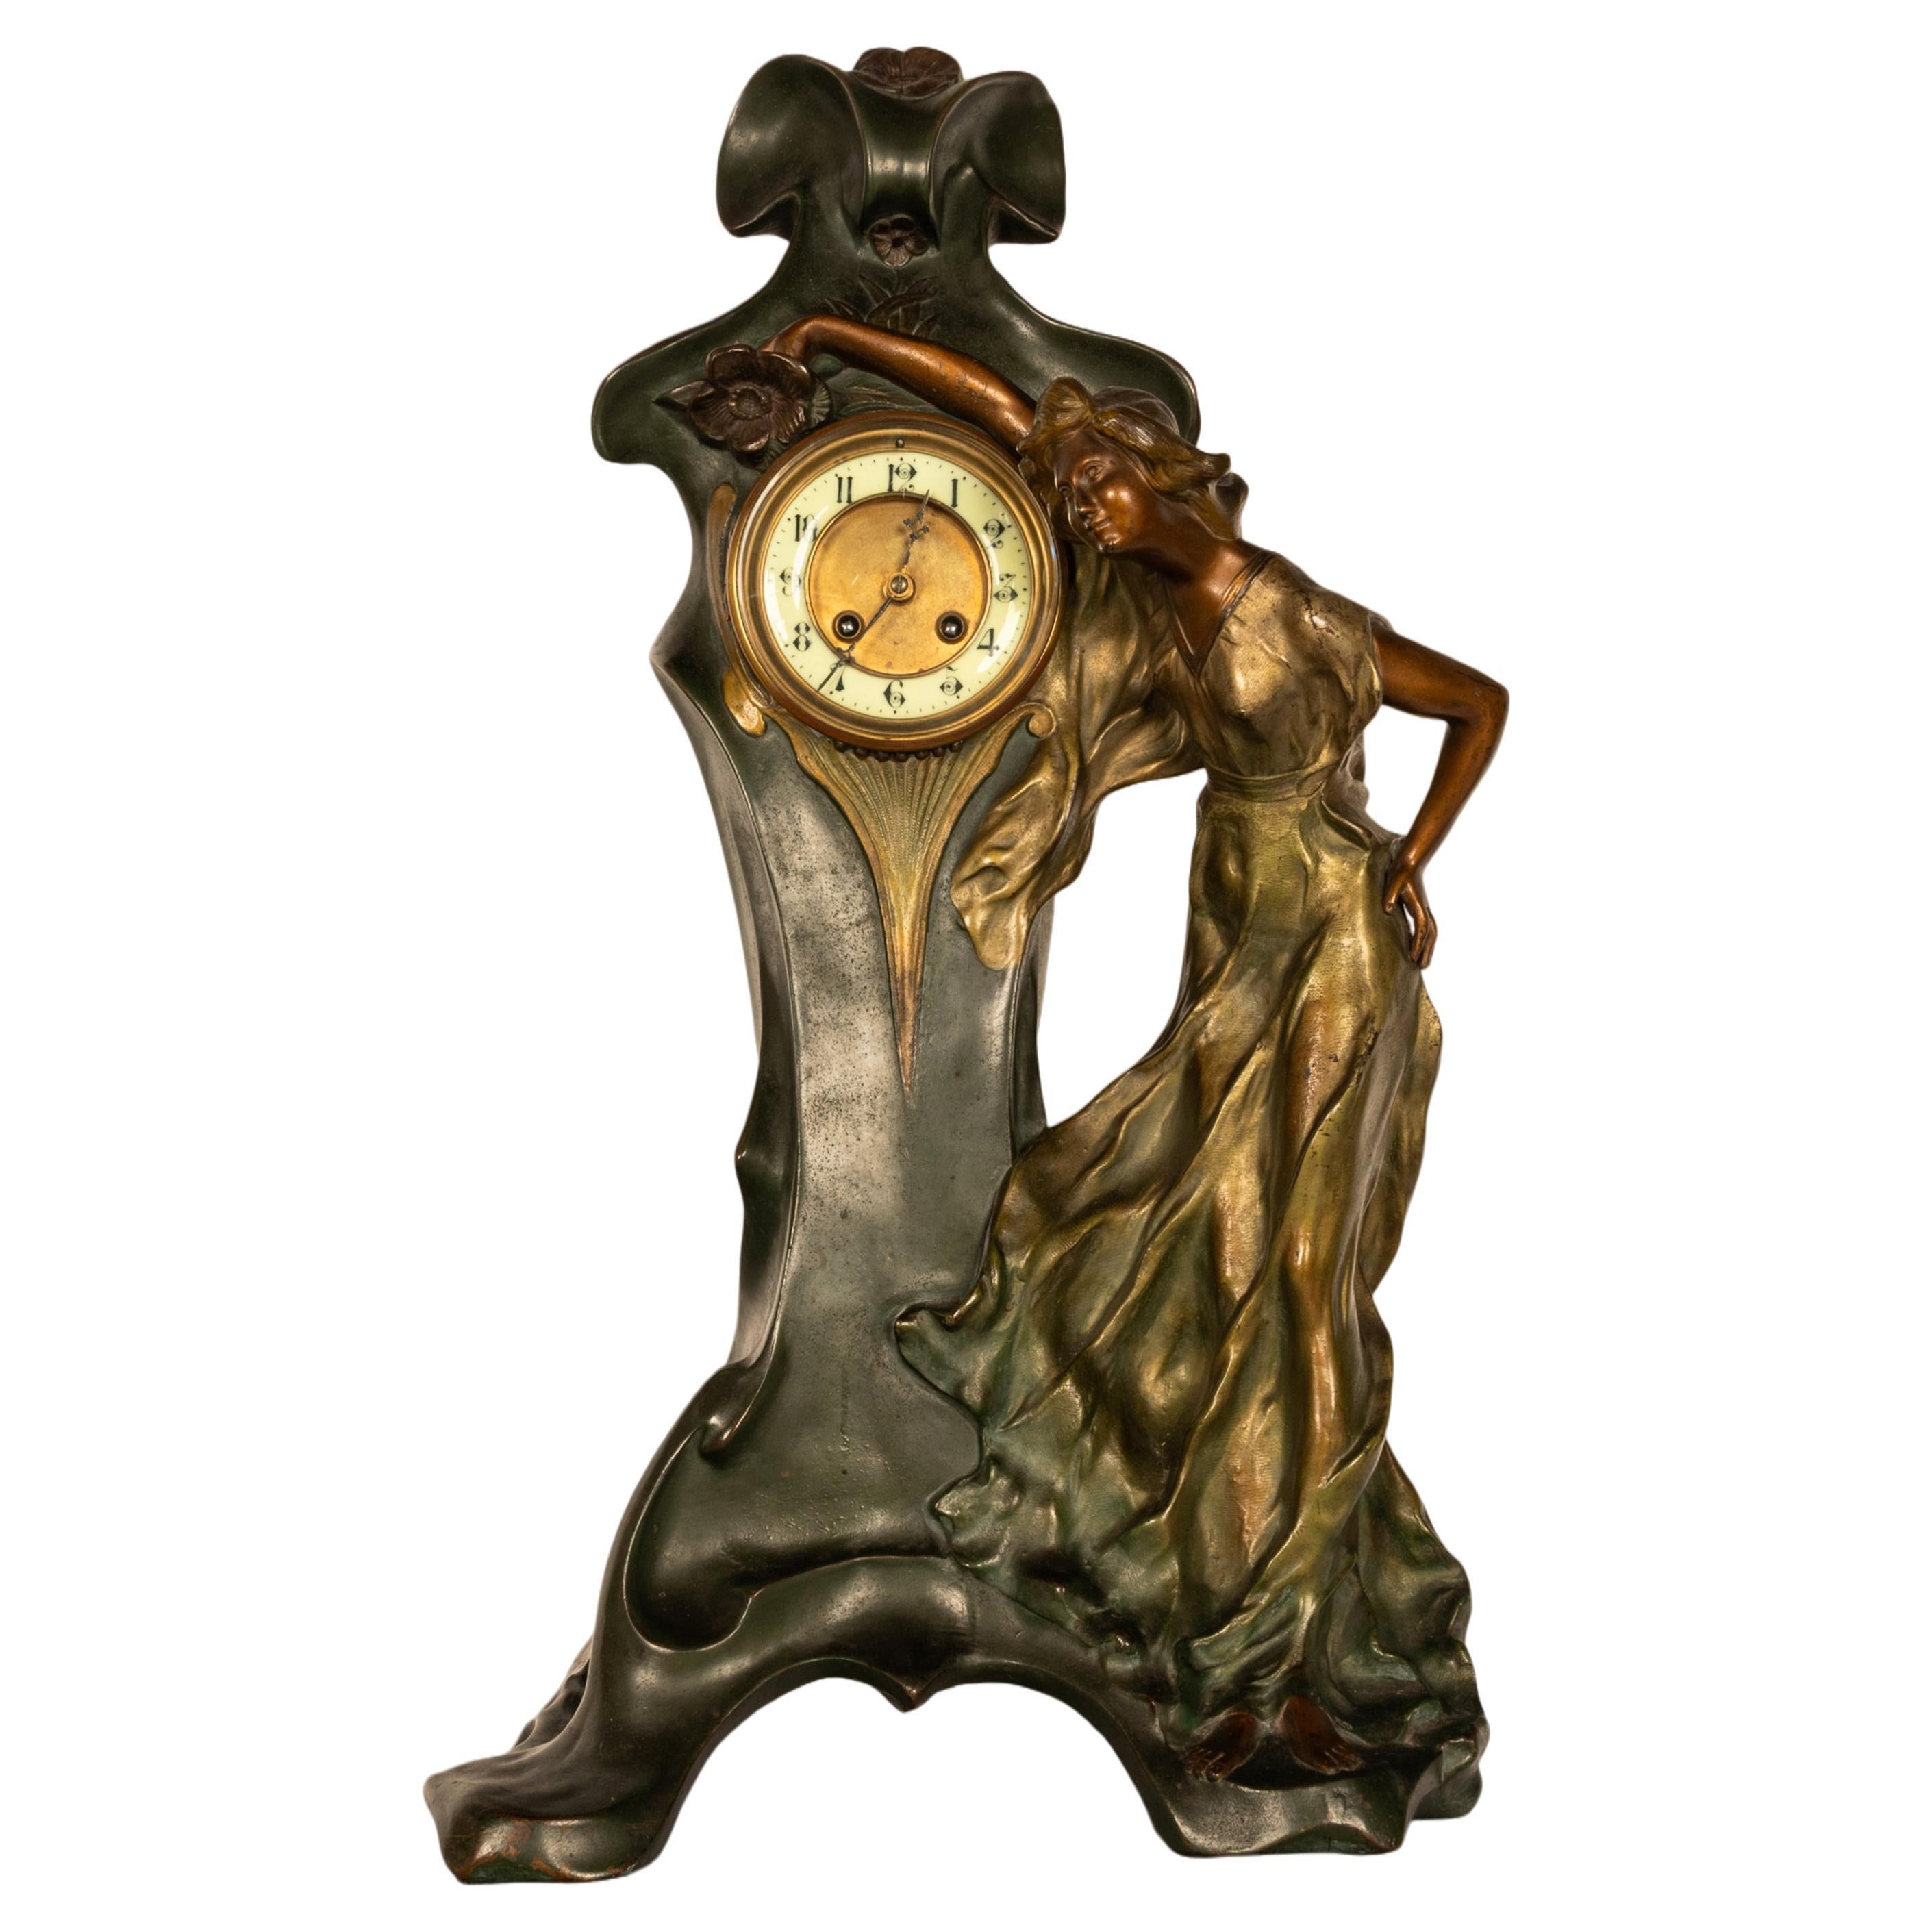 Antique French Art Nouveau Cold-Painted Bronze Figural Statue 8 Day Clock 1900 For Sale